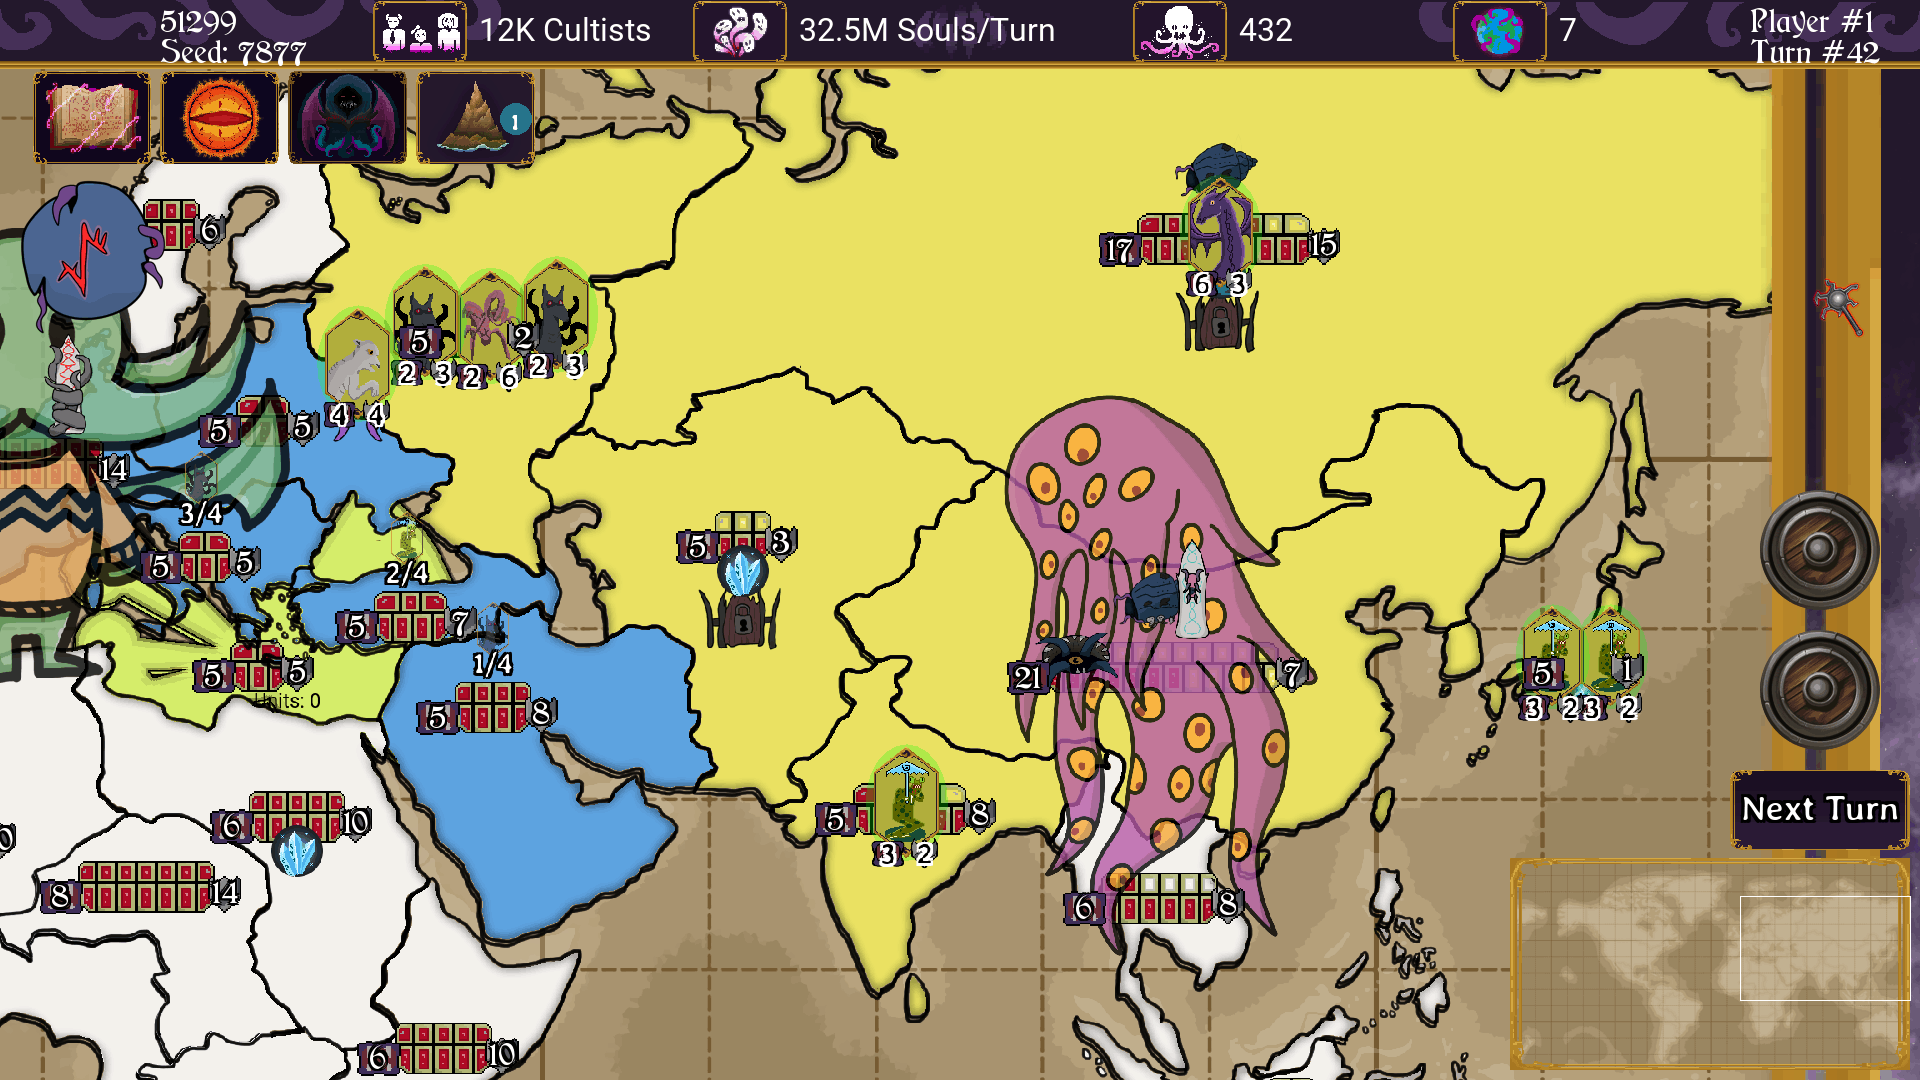 Cthulhu's Catharsis game screenshot, crowded map